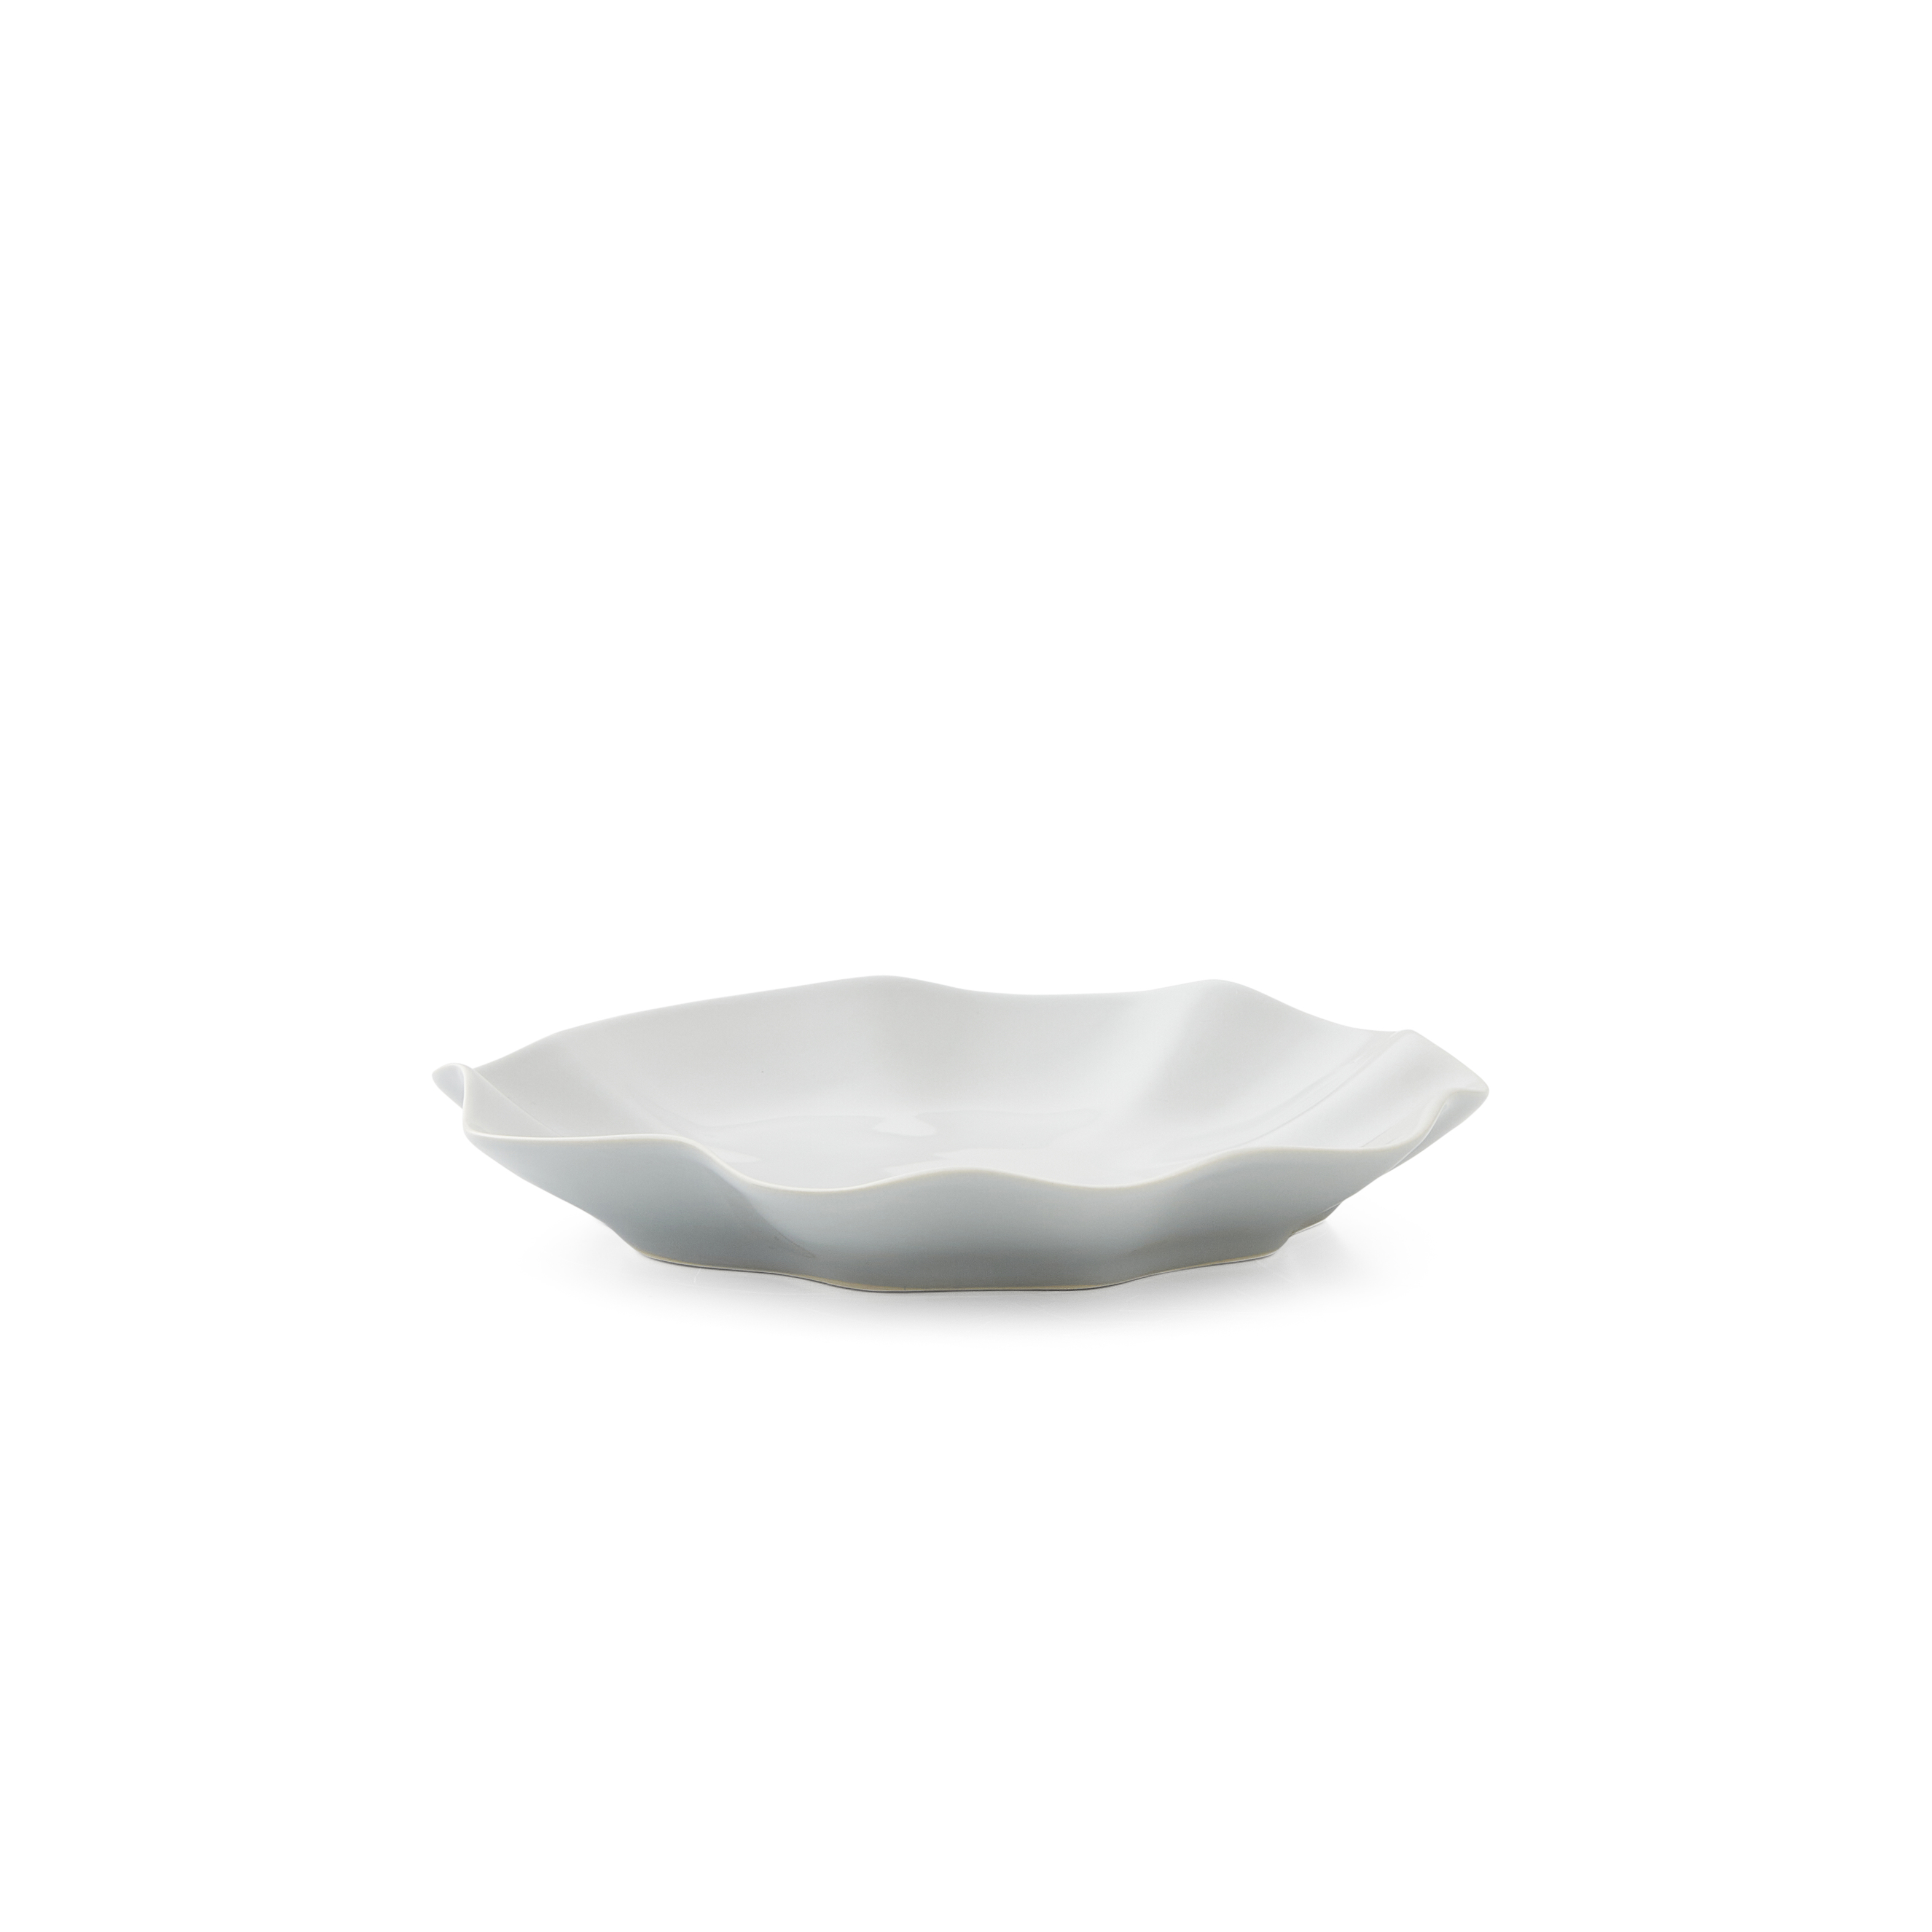 Sophie Conran Floret 8.5 Inch Salad Plate, Dove Grey image number null